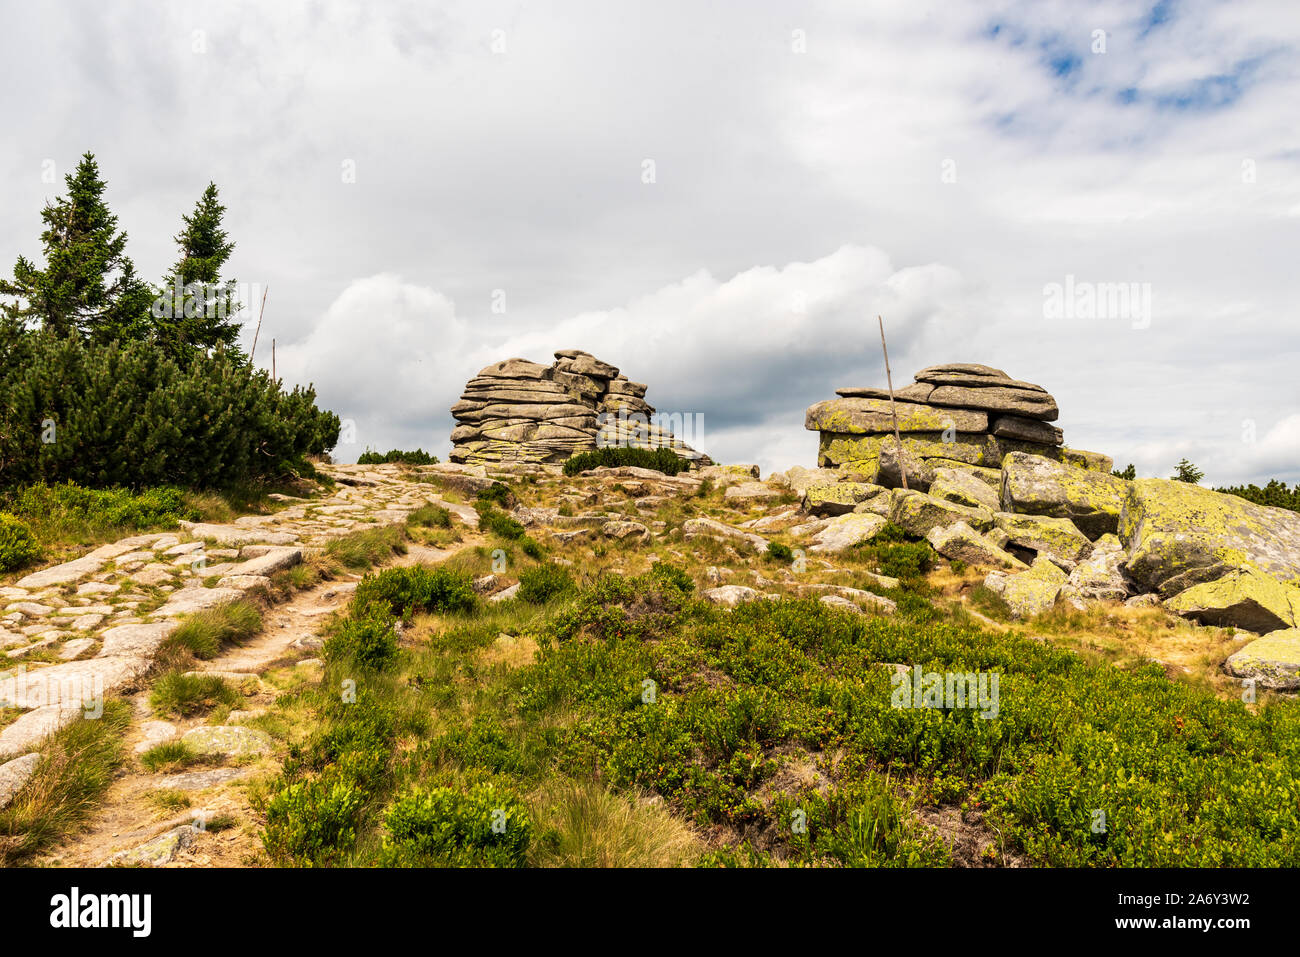 Divci kameny rocks with stone hiking trail in Krkonose mountains on czech - polish border Stock Photo